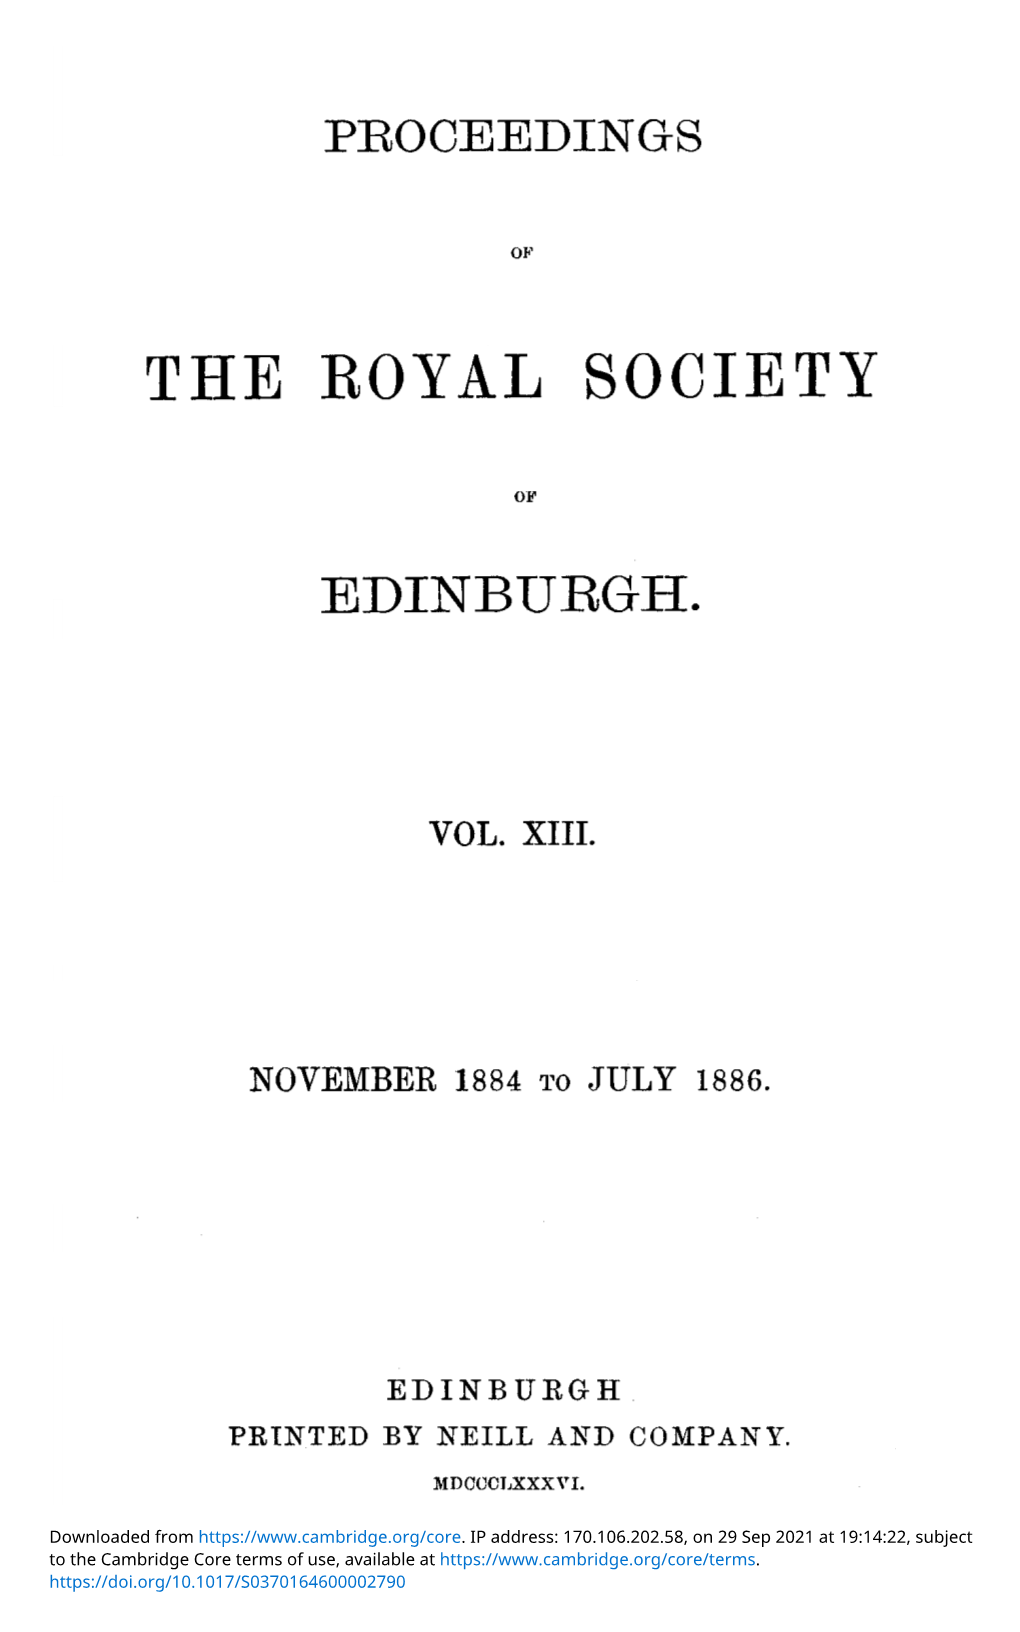 The Eoyal Society